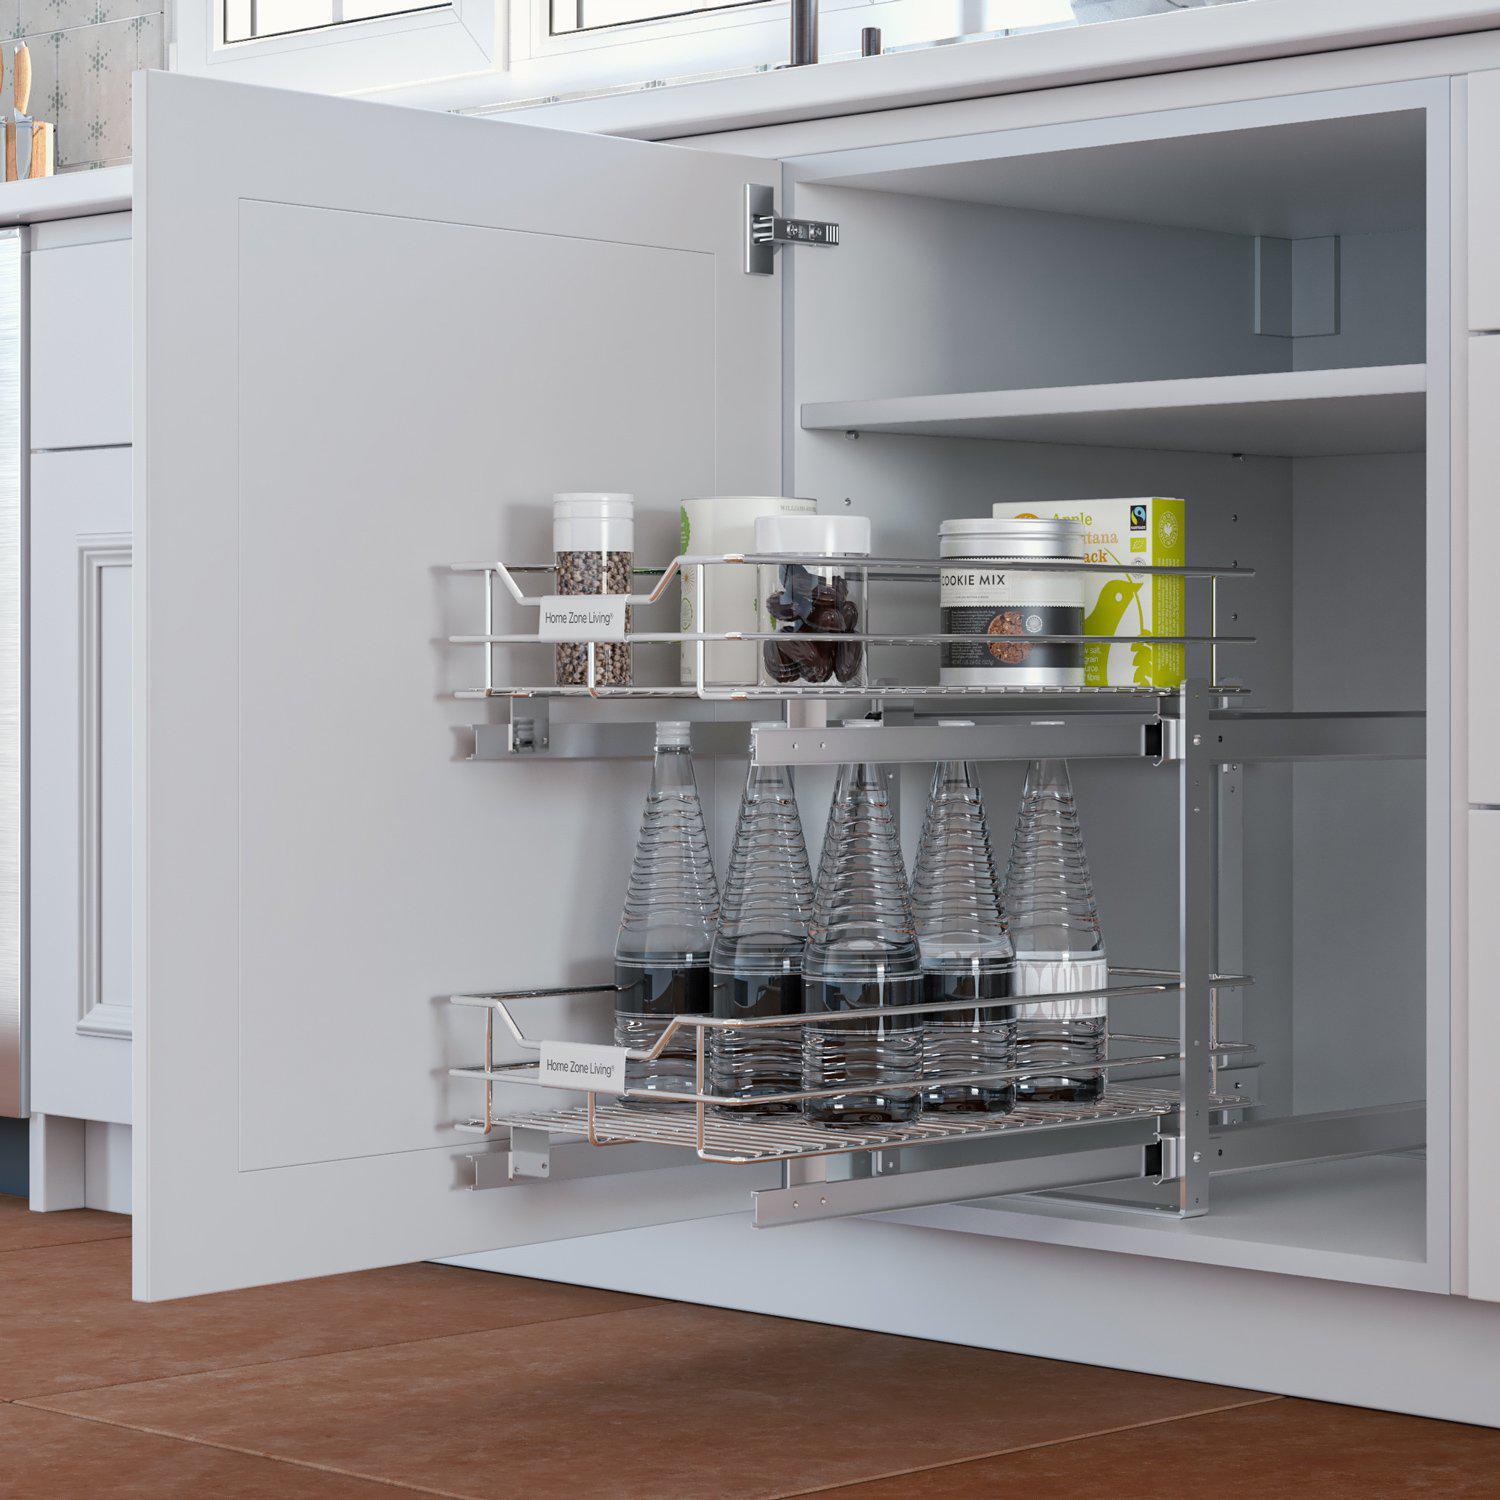 Pull Out Drawer Cabinet Organizer for Kitchen Storage, 11” W x 20